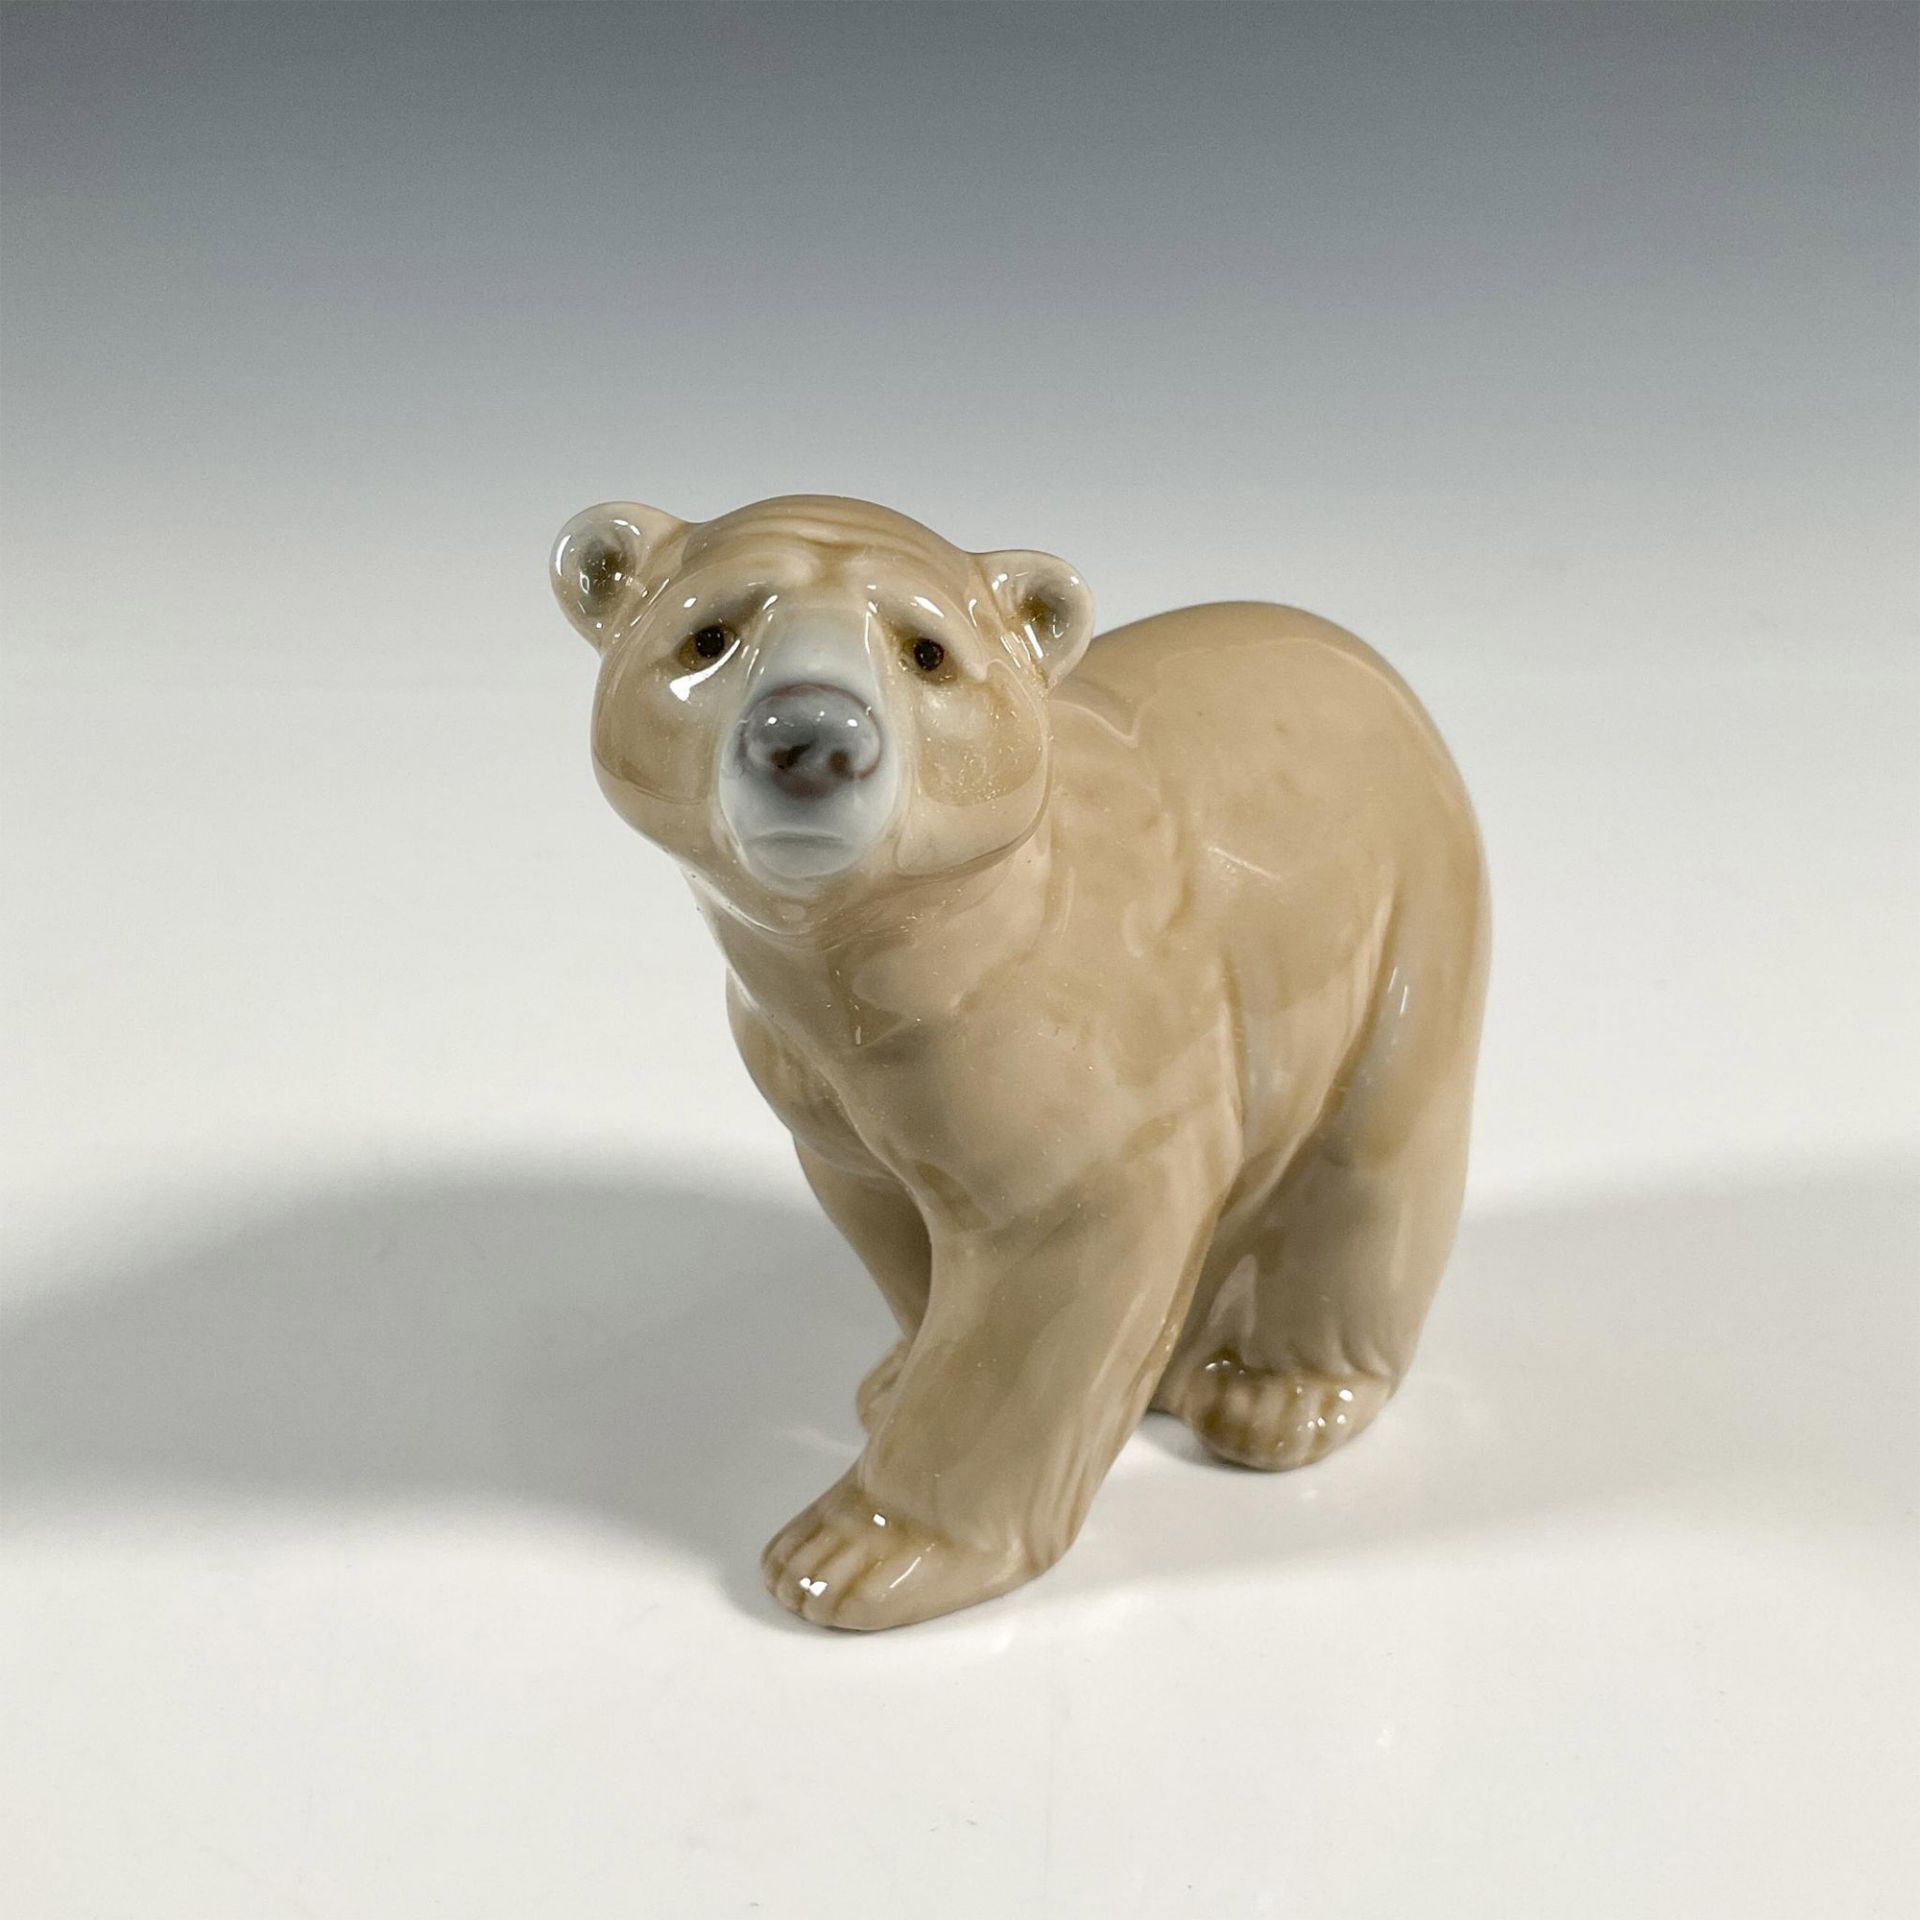 Attentive Bear 1001204 - Lladro Porcelain Figurine